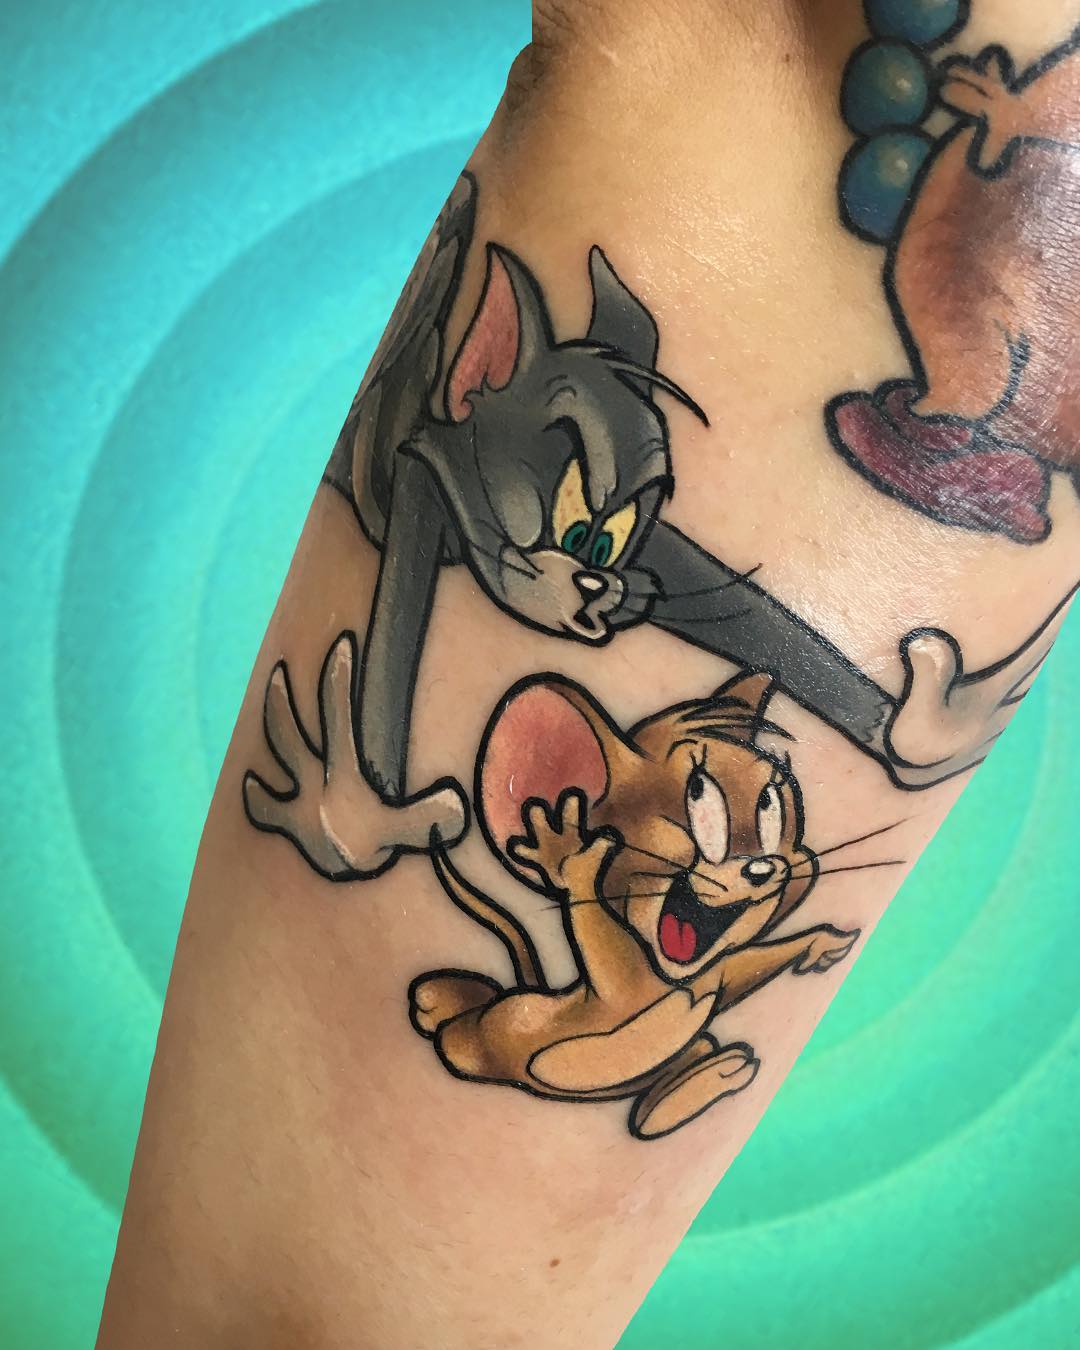 Tom and Jerry tattoo by @daniela.dag